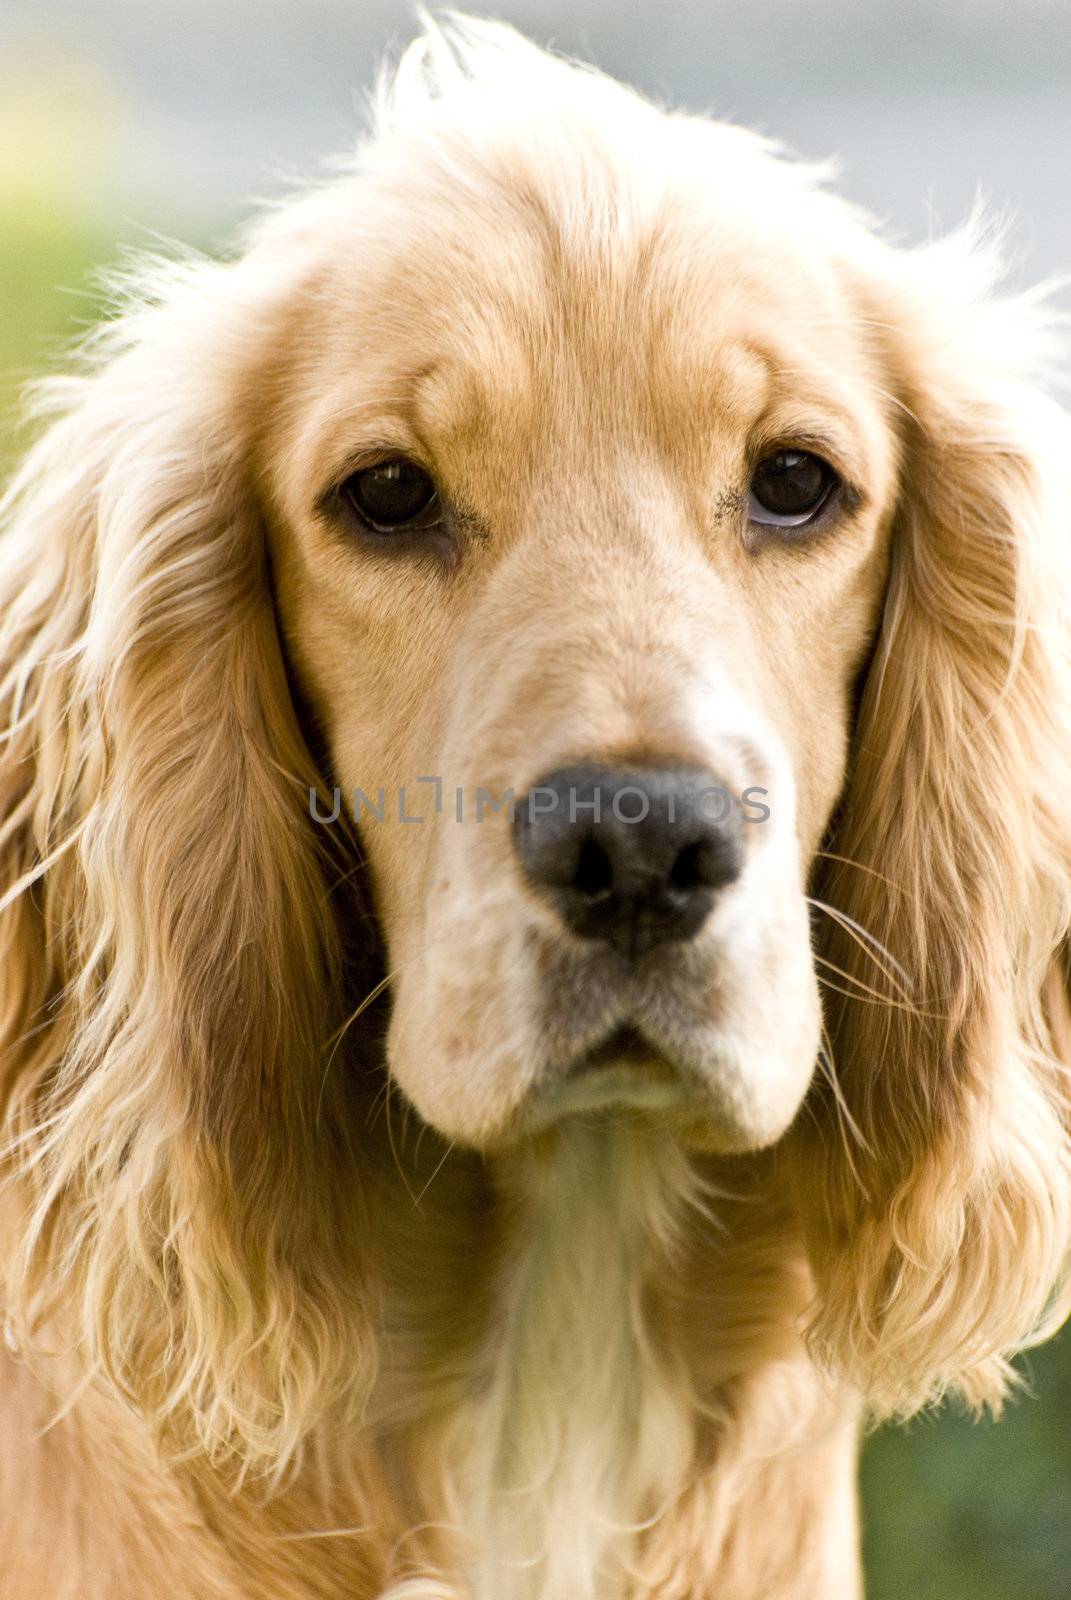 Close up portrait of a dog.